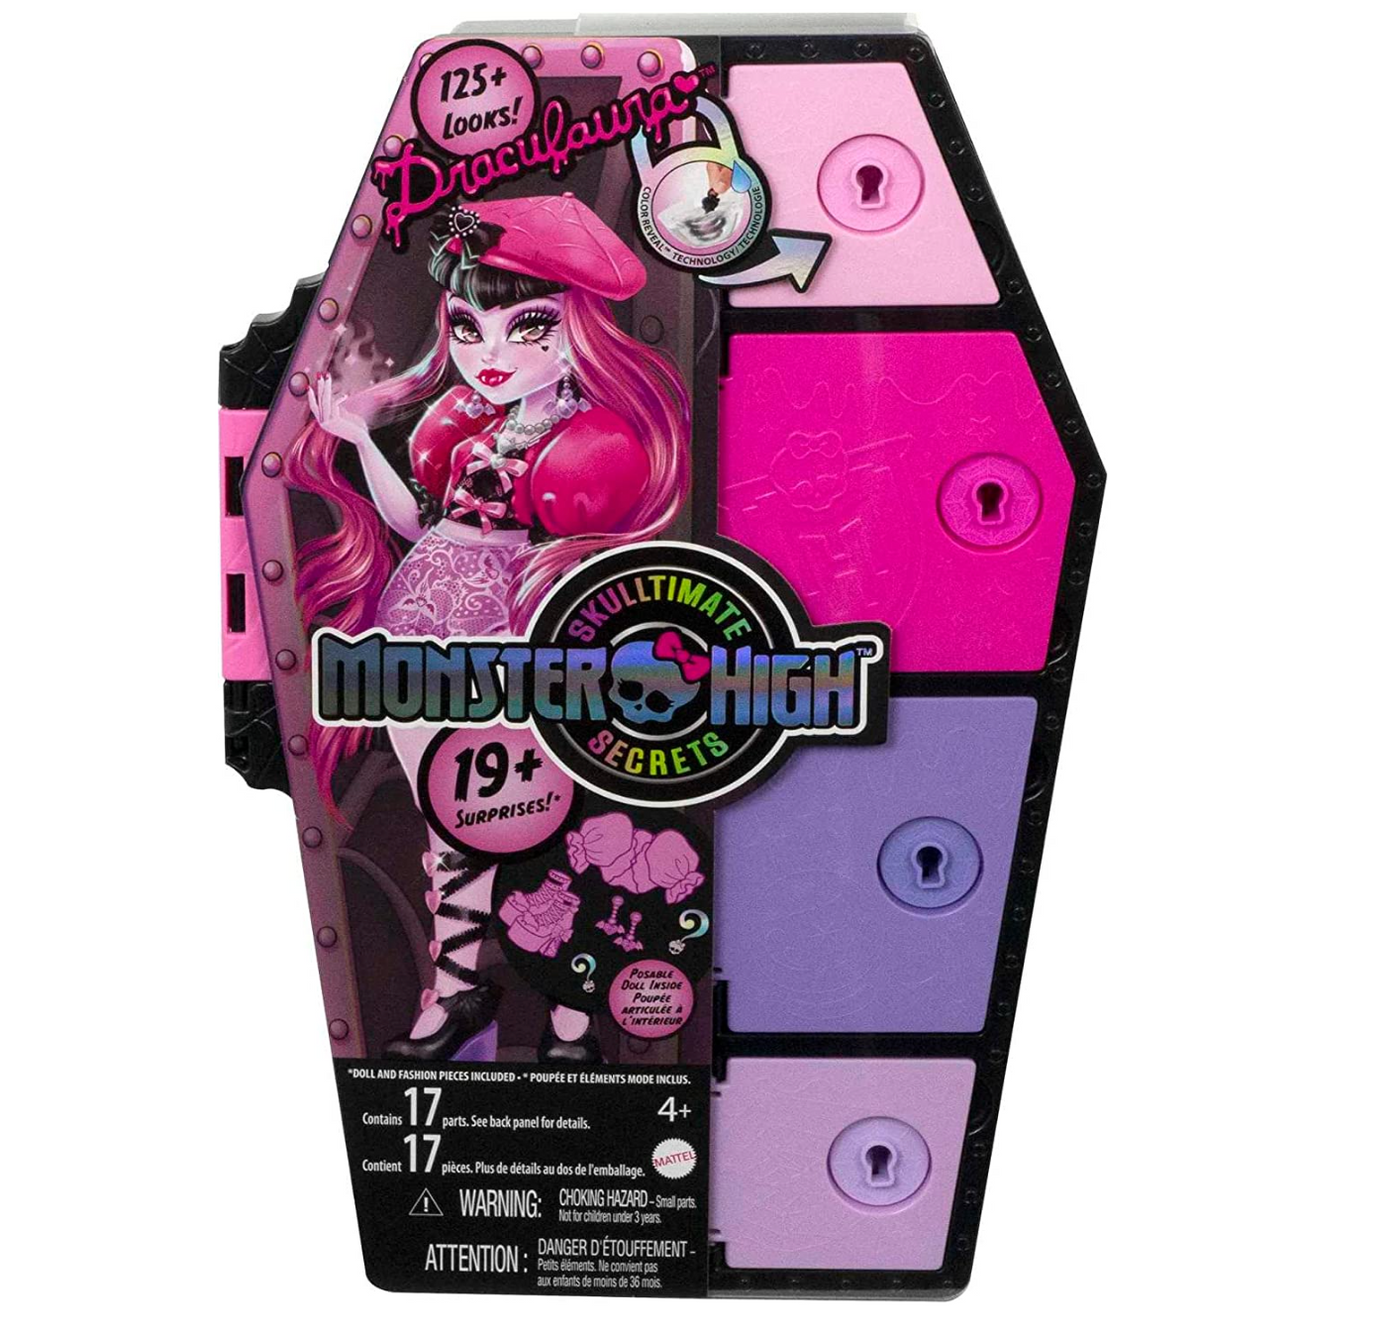 Mattel Monster High Skulltimate Secrets Dress - Up Locker Draculaura Doll New